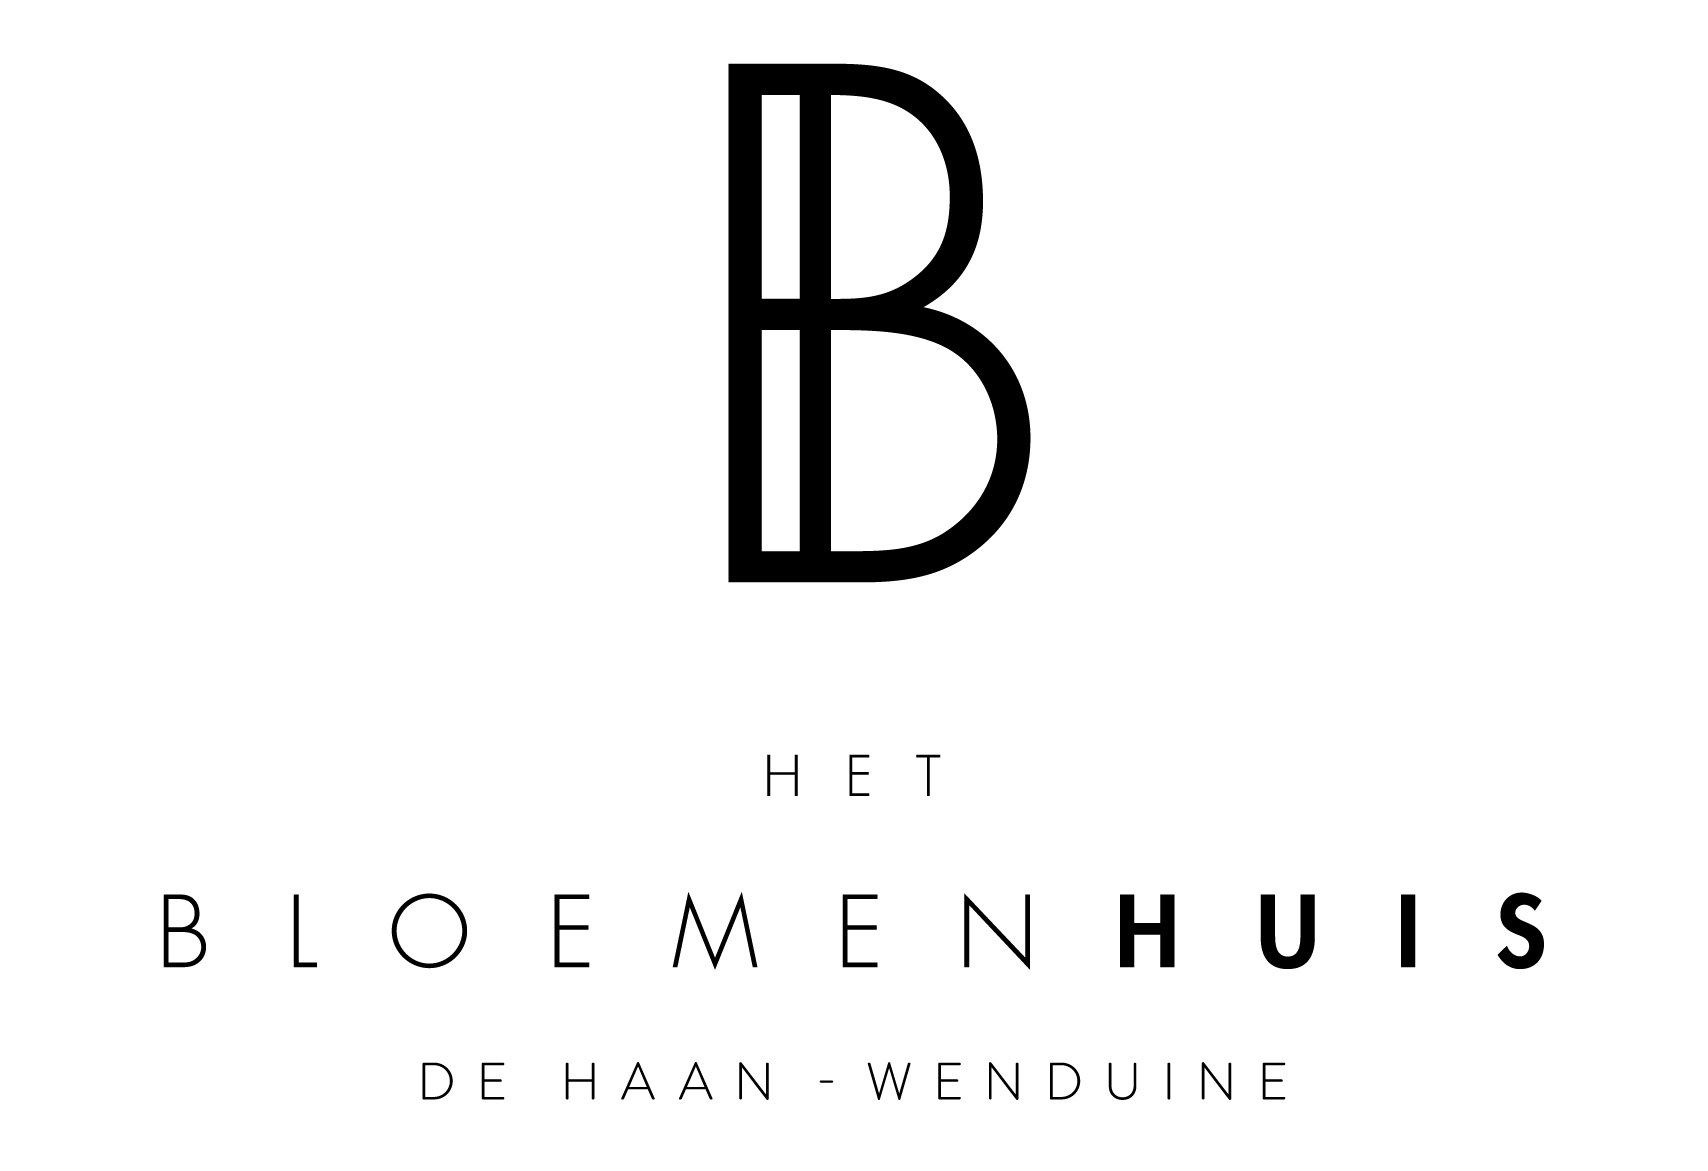 bloemenhuis-logo-header